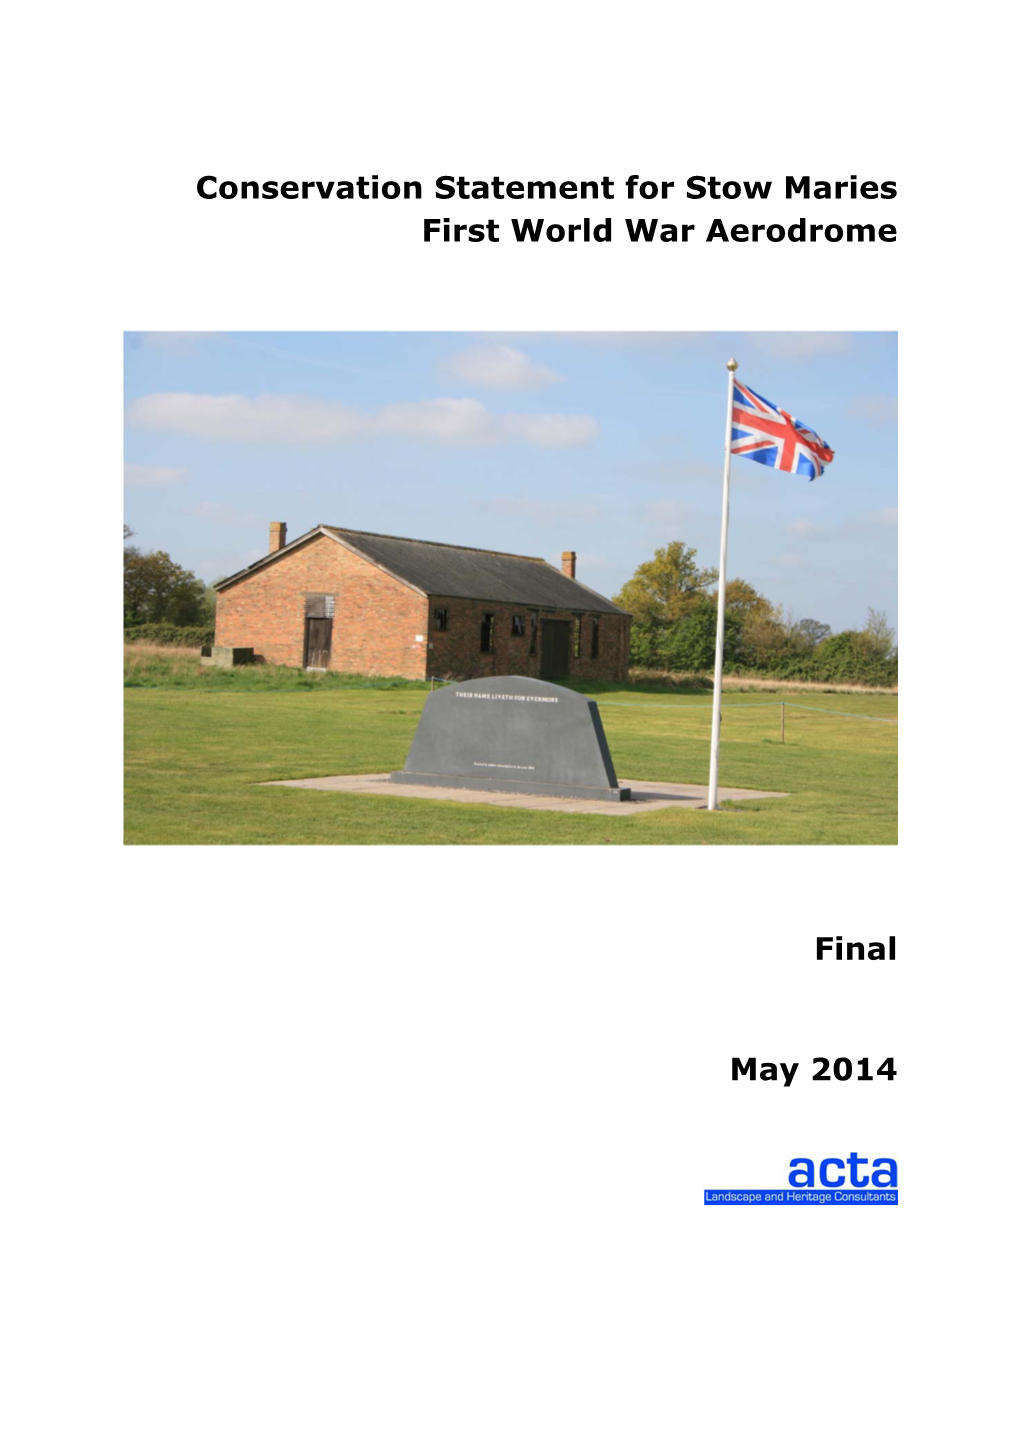 Conservation Statement for Stow Maries First World War Aerodrome